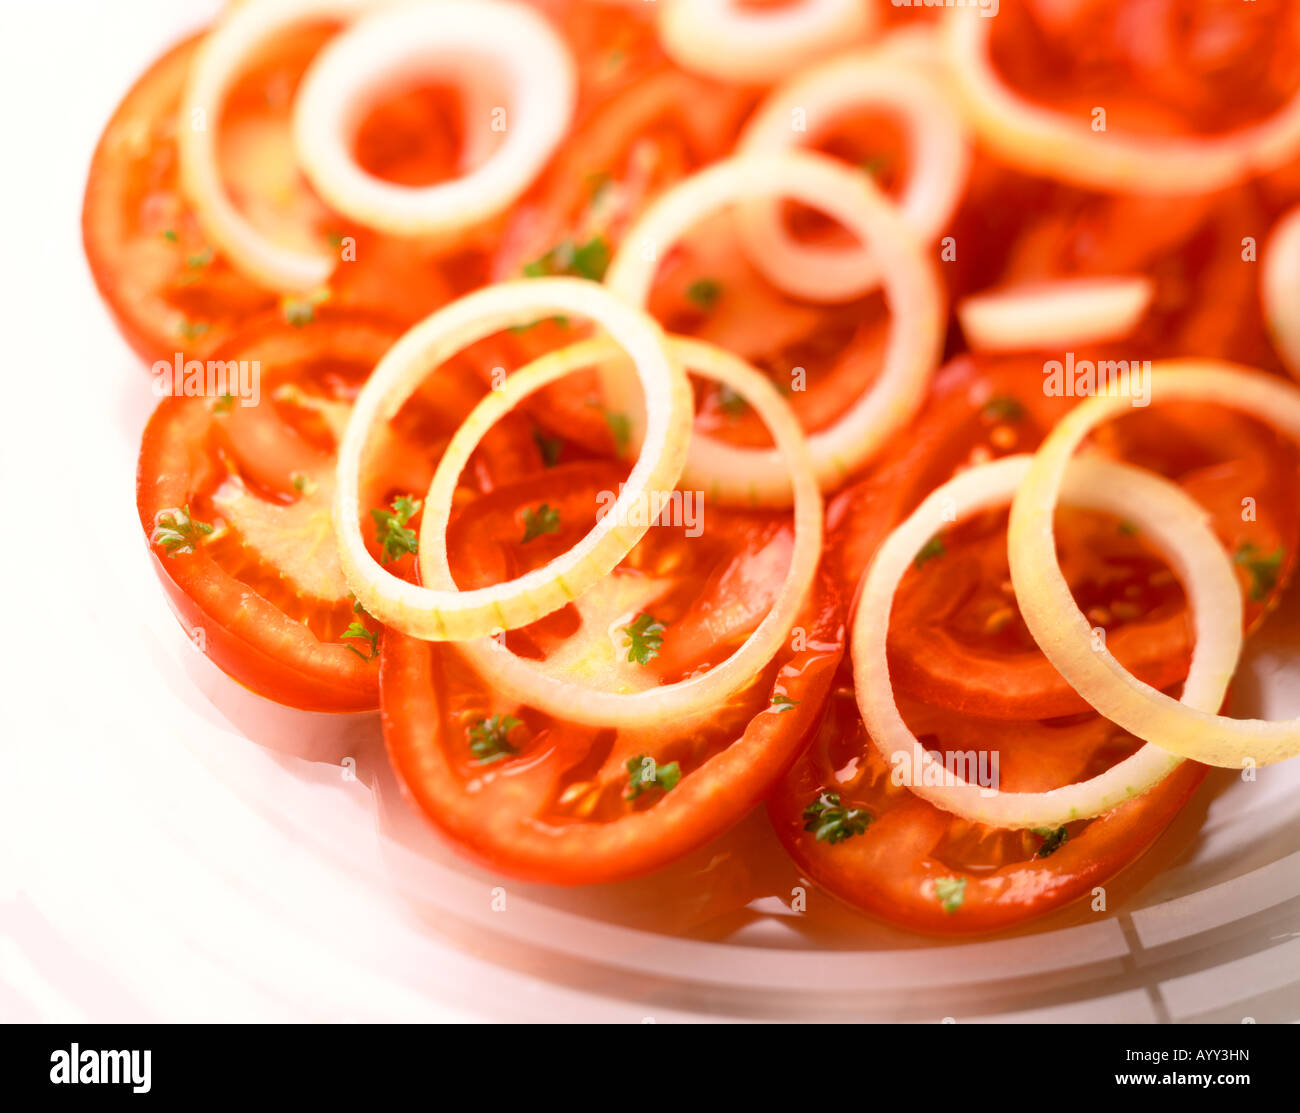 SHOT OF A FRESH TOMATO AND ONION SALAD Stock Photo